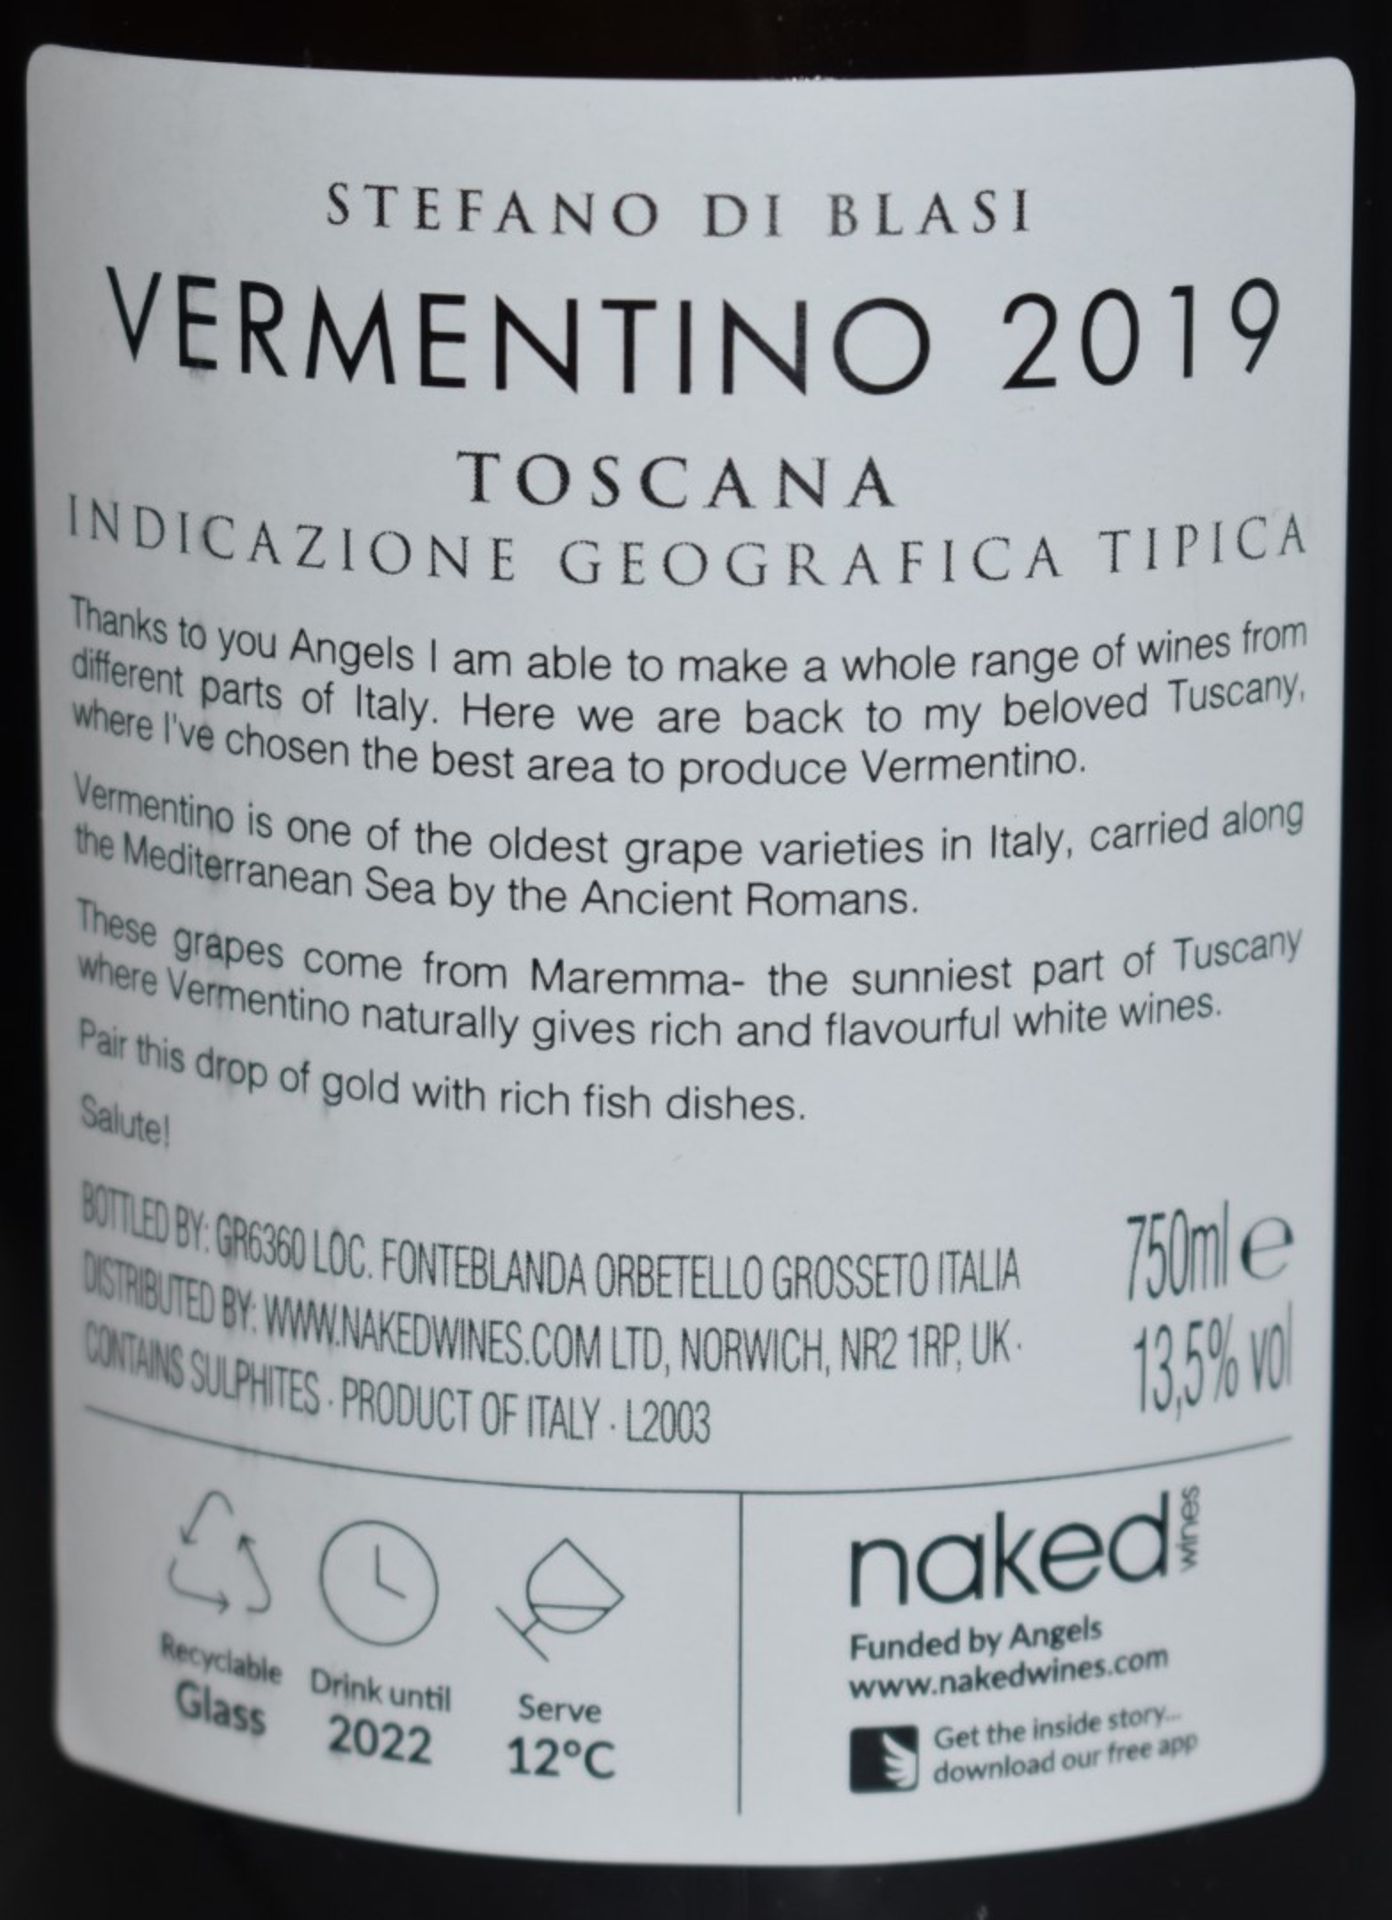 12 x Bottles of Stefano Di Blasi 2019 Vermentino Toscana 13.5% Wine - 750ml Bottles - Drink Until - Image 3 of 7